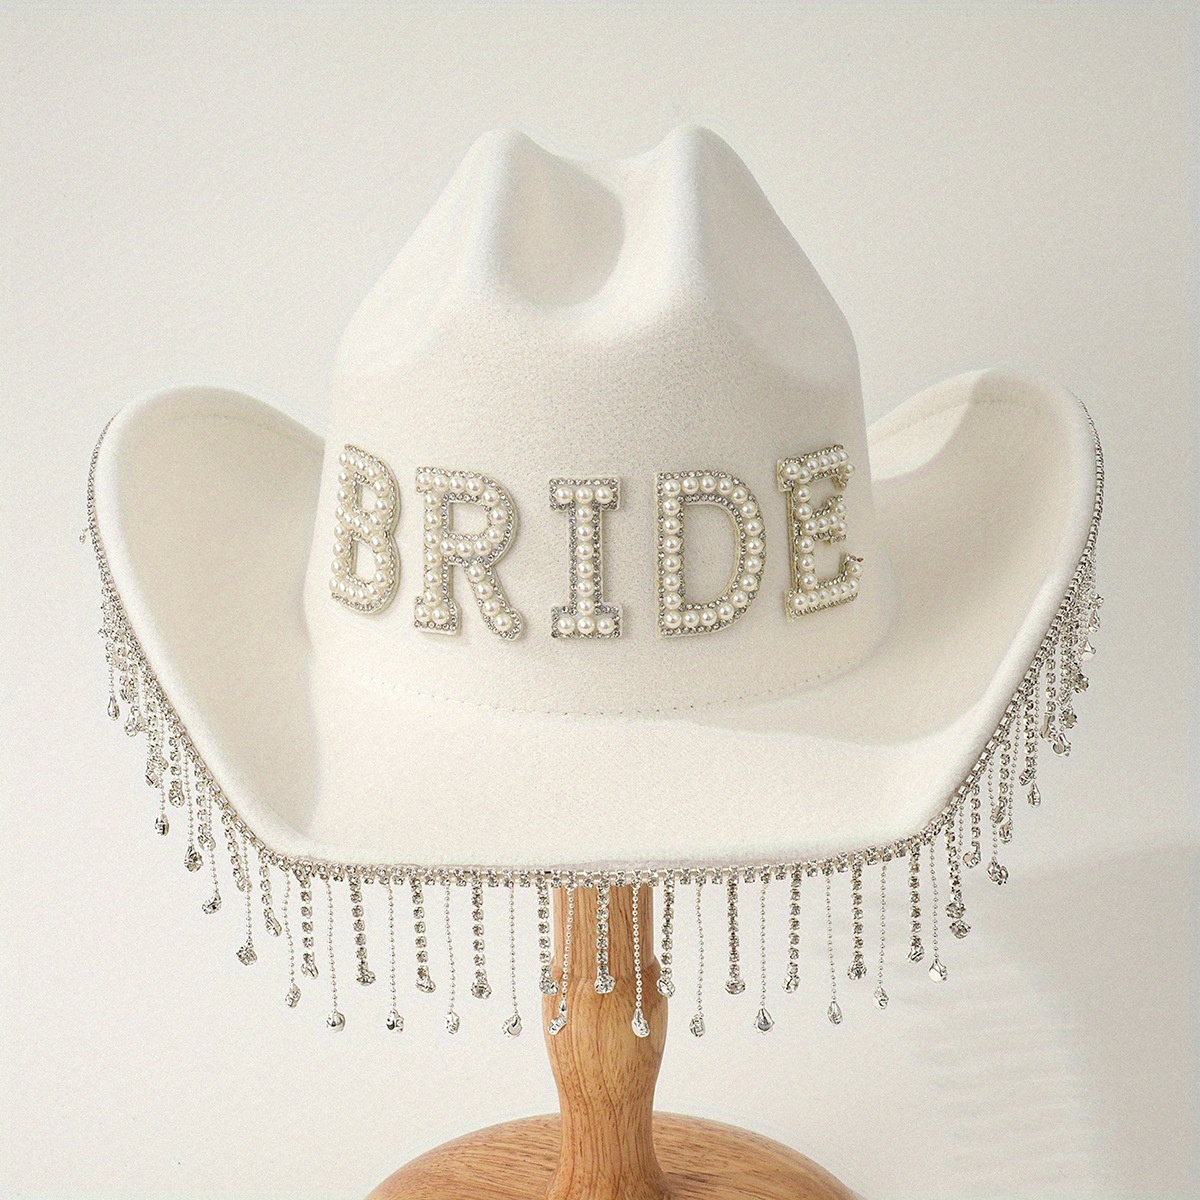 

Stylish Cowgirl Hats With Rhinestone "bride" & Tassels, Bridal Wedding Party Accessory, Women's Stylish Western Cowboy Hat For Bachelorette & Ceremonies